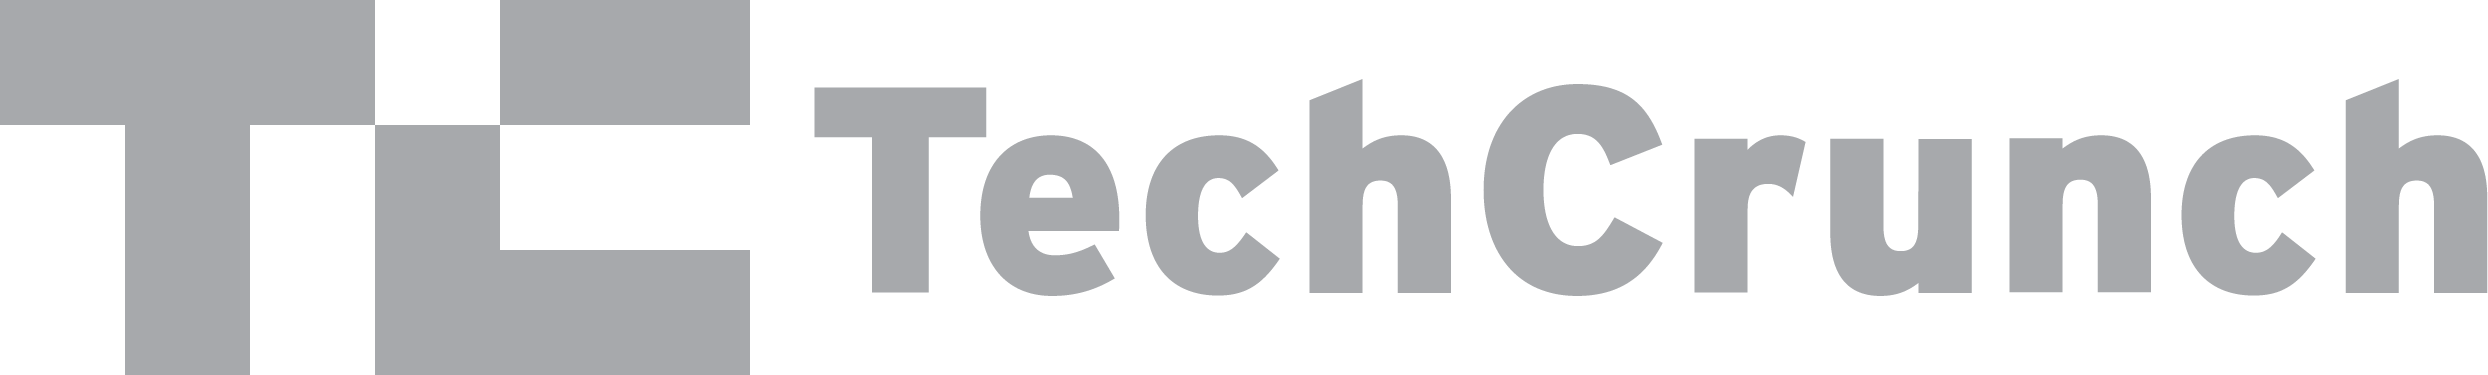 TechCrunch-logo.png